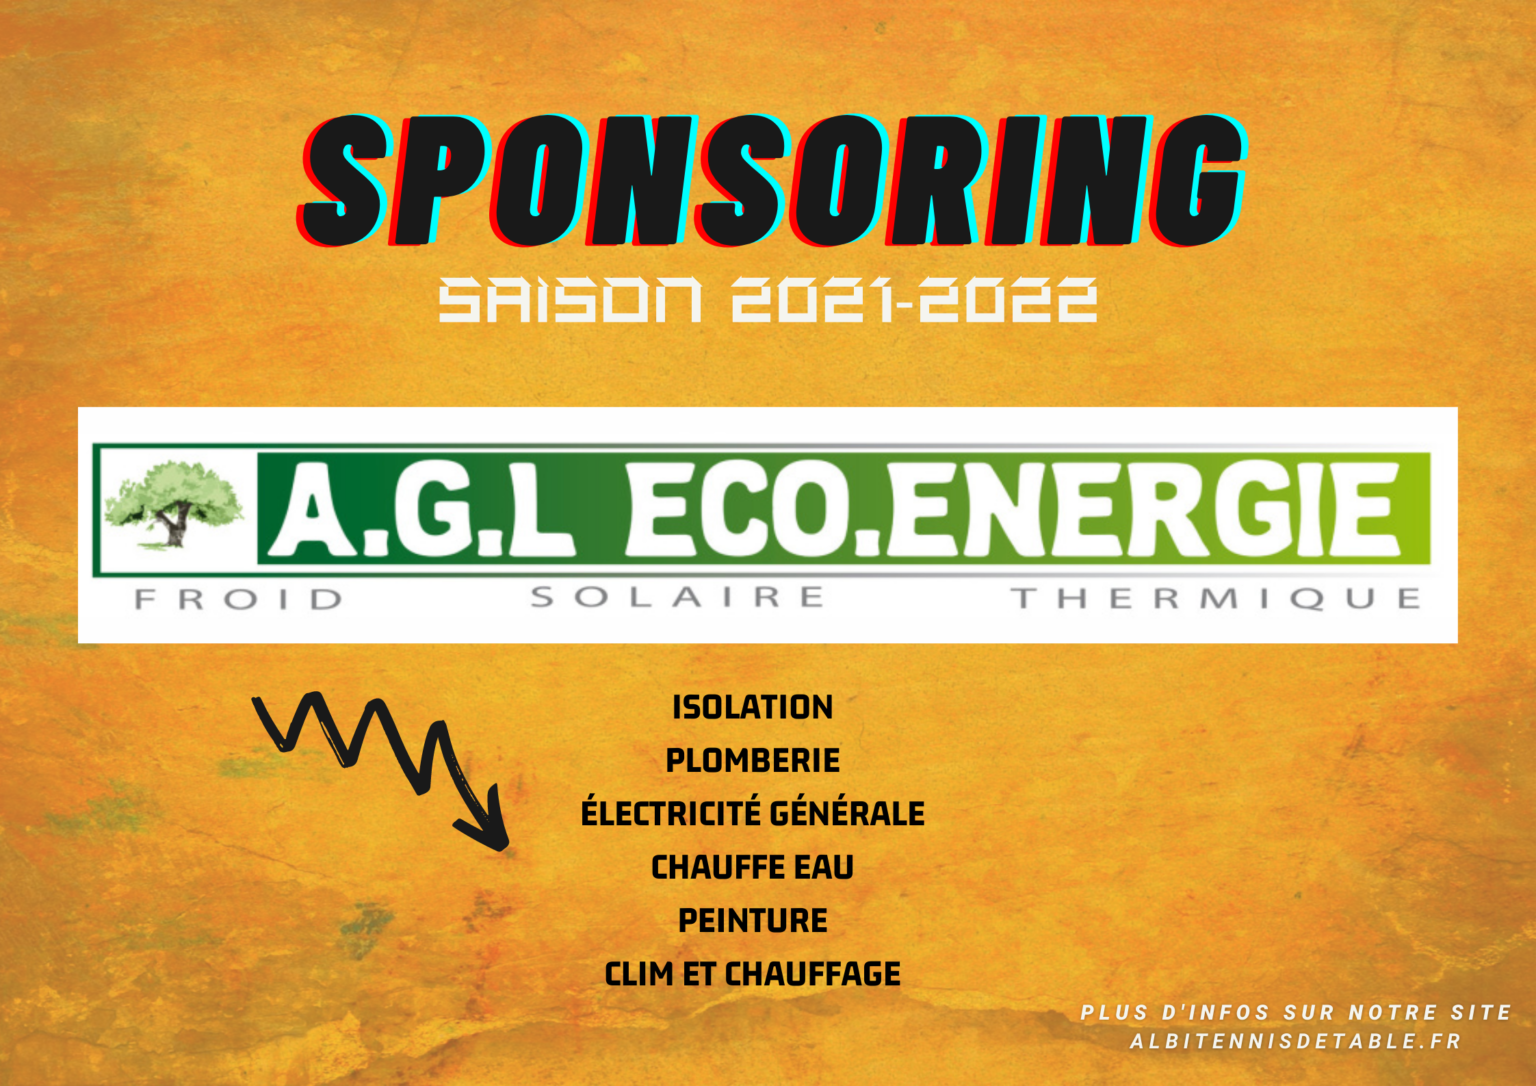 Sponsoring : AGL Eco.Energie